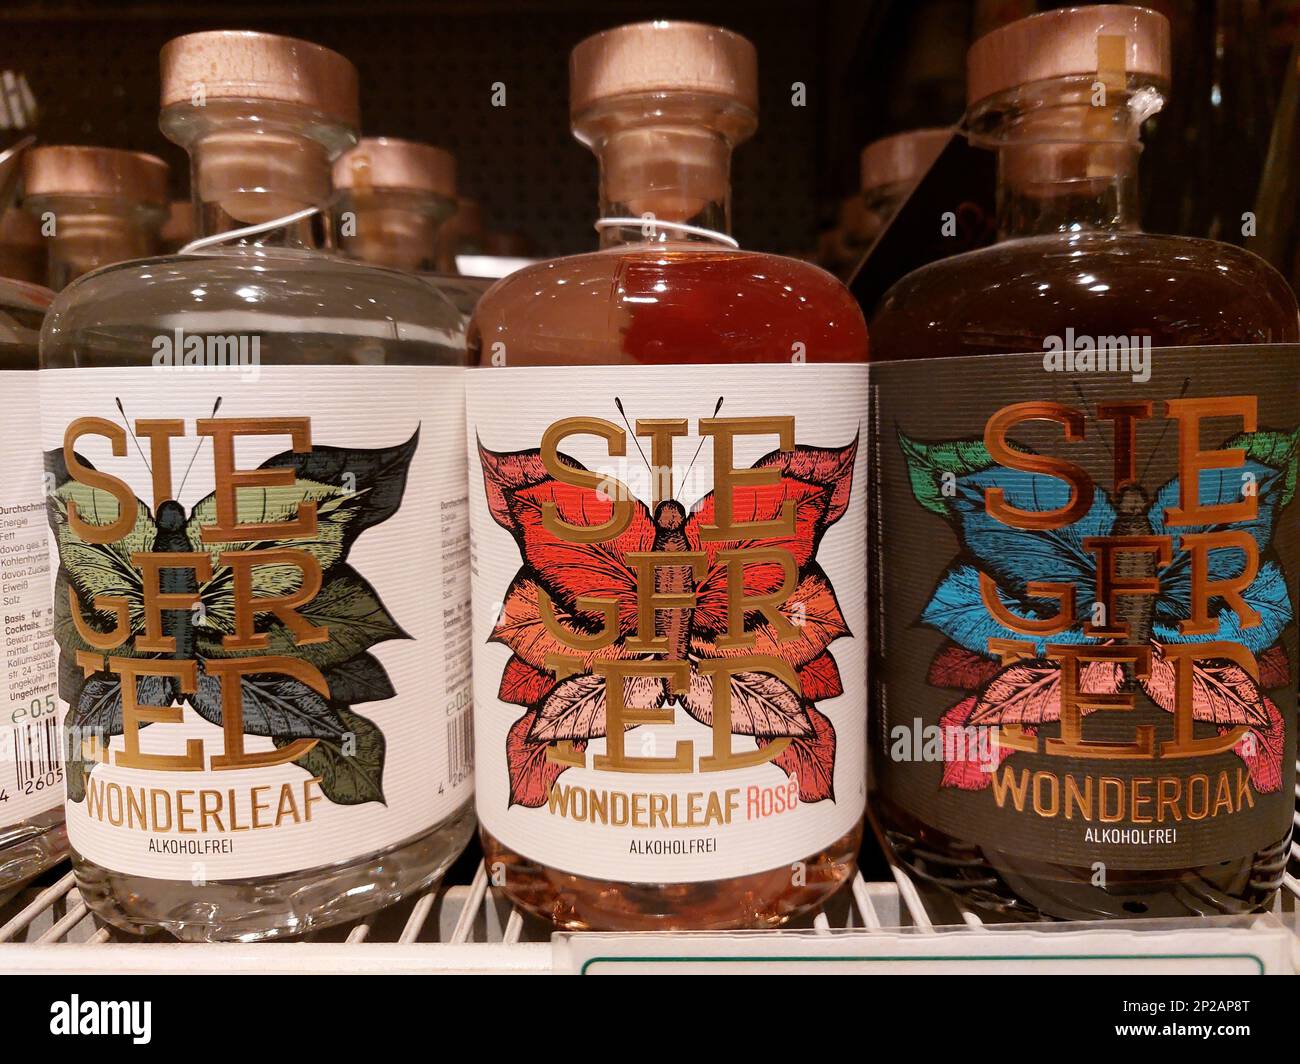 Wonderleaf supermarket choice Wonderoak a of Siegfried bottles Alamy alcohol Photo Stock and - free in by